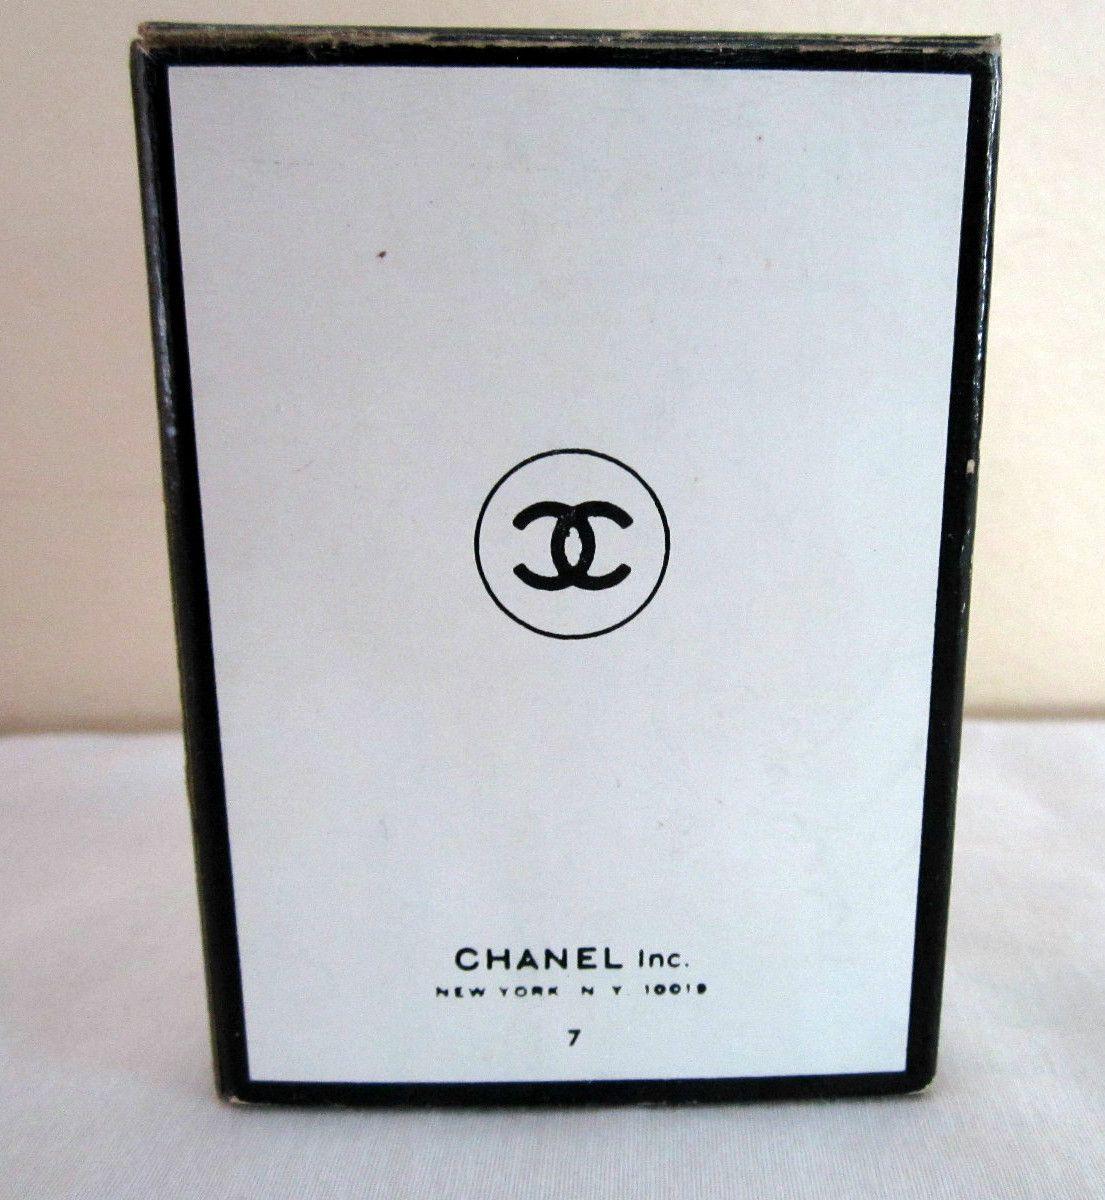 Chanel Perfume Number Logo - Chanel Perfume Bottles: May 2013